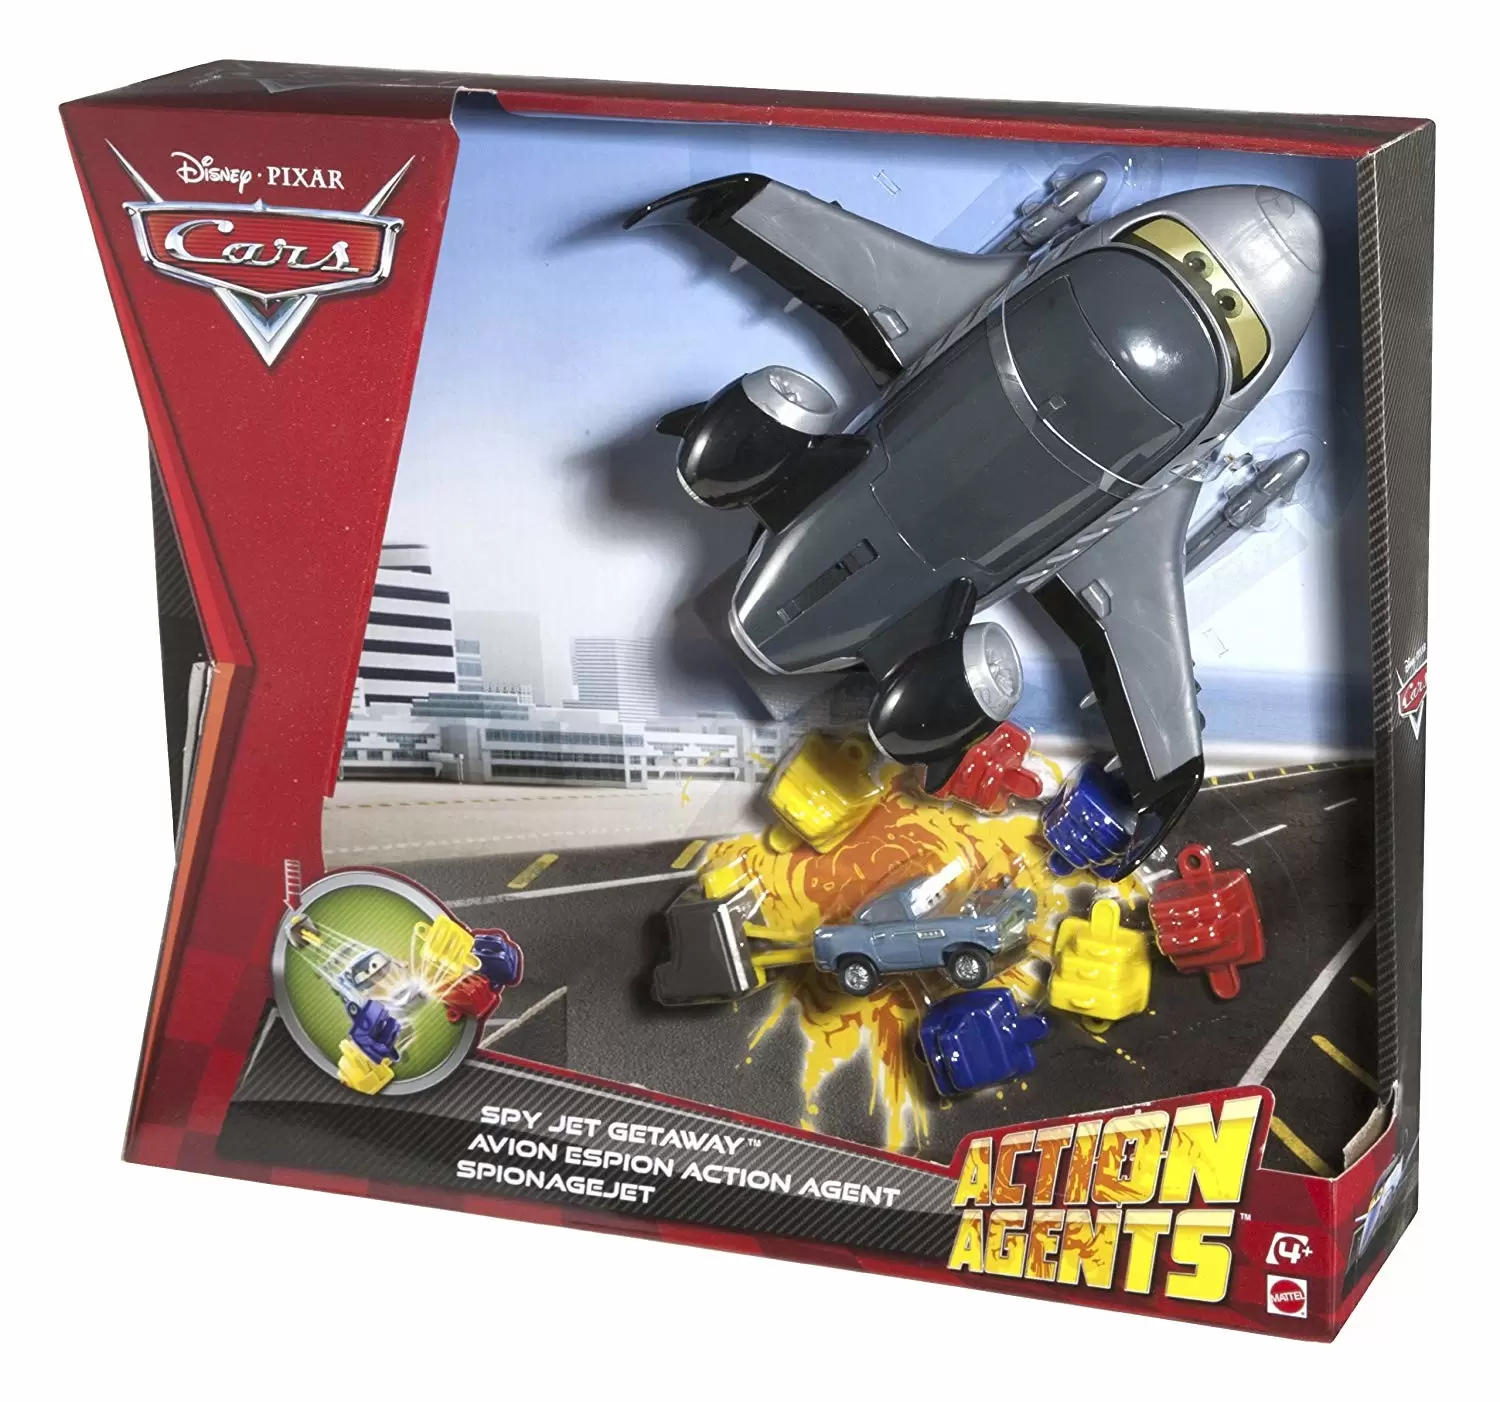 Cars Action Agents - Spy Jet Getaway